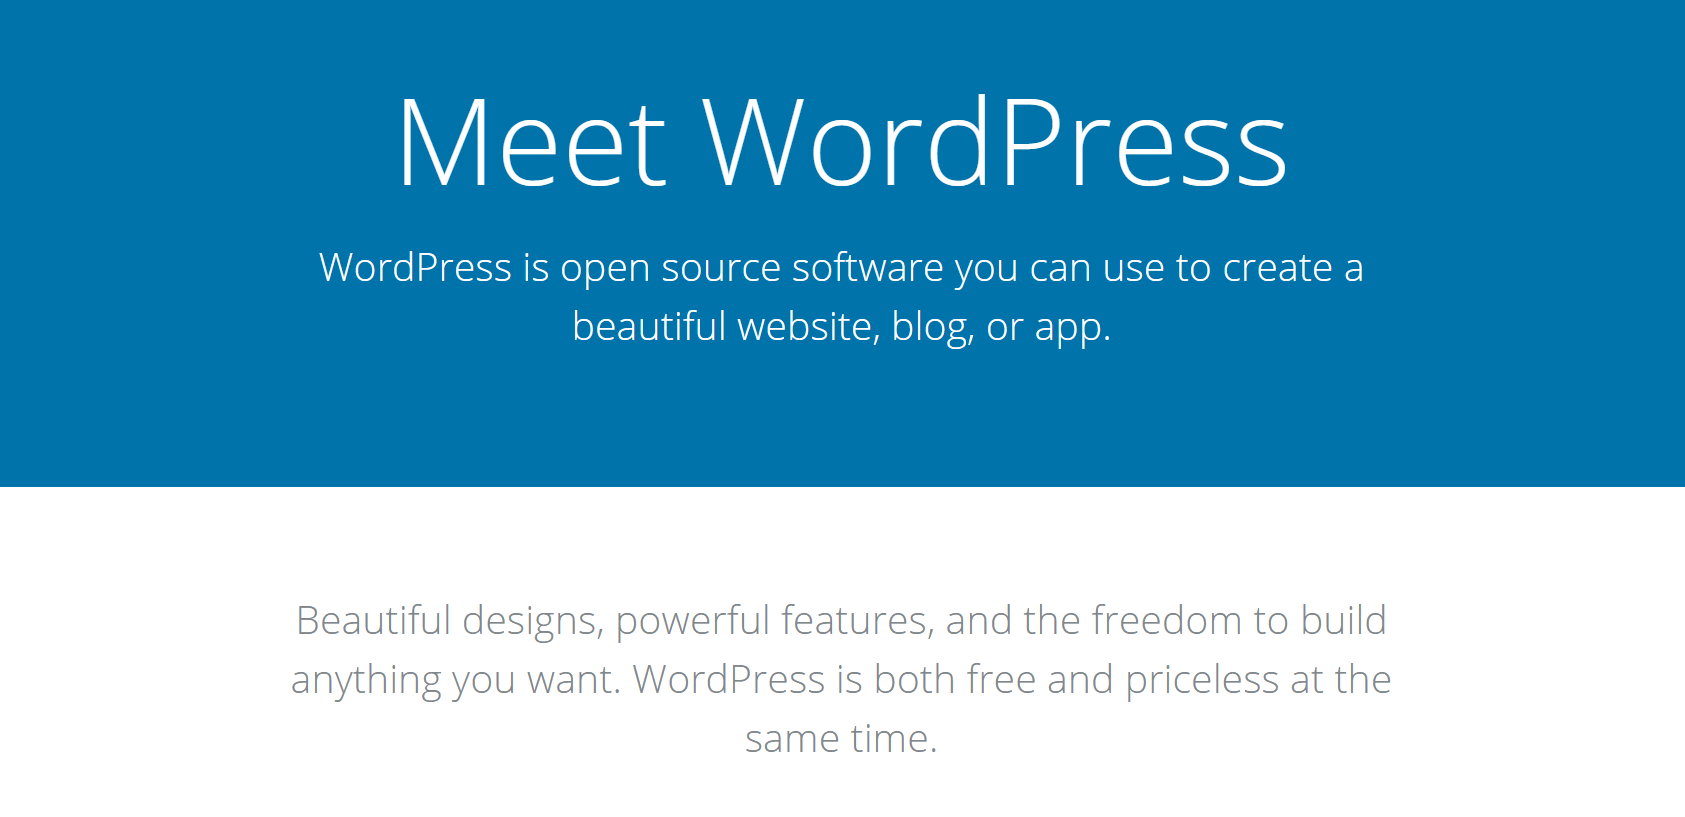 Trang web WordPress.